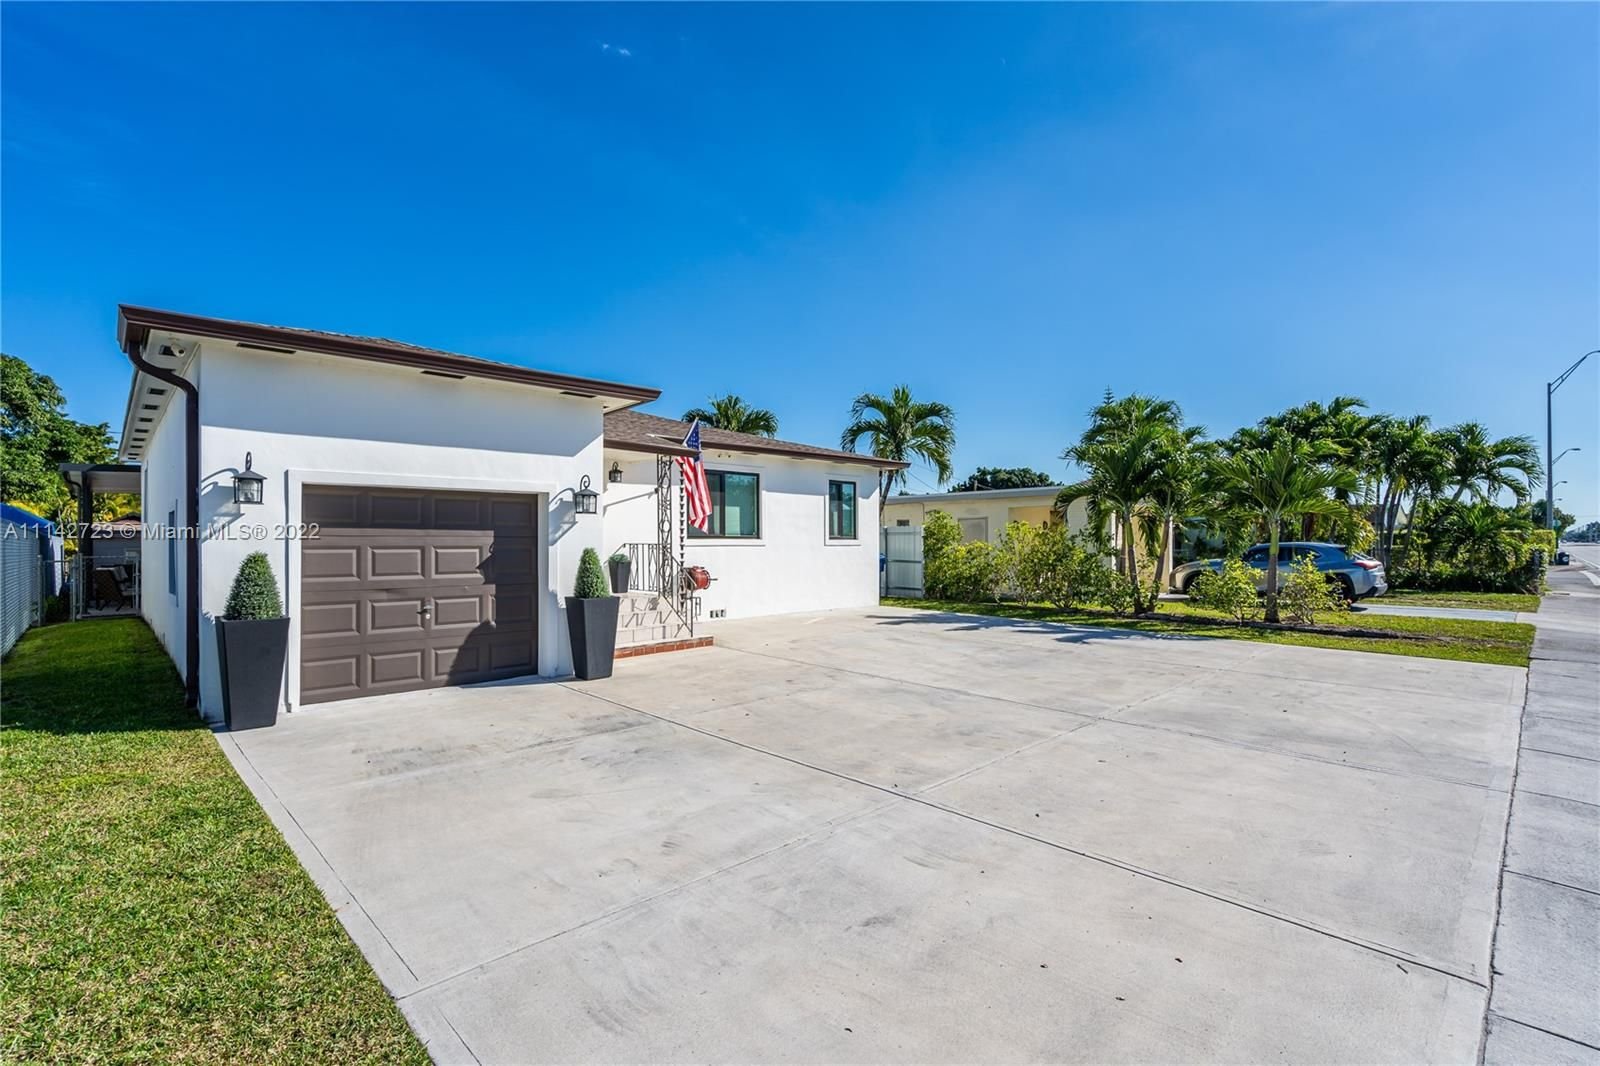 Real estate property located at 2631 67th Ave, Miami-Dade County, Miami, FL